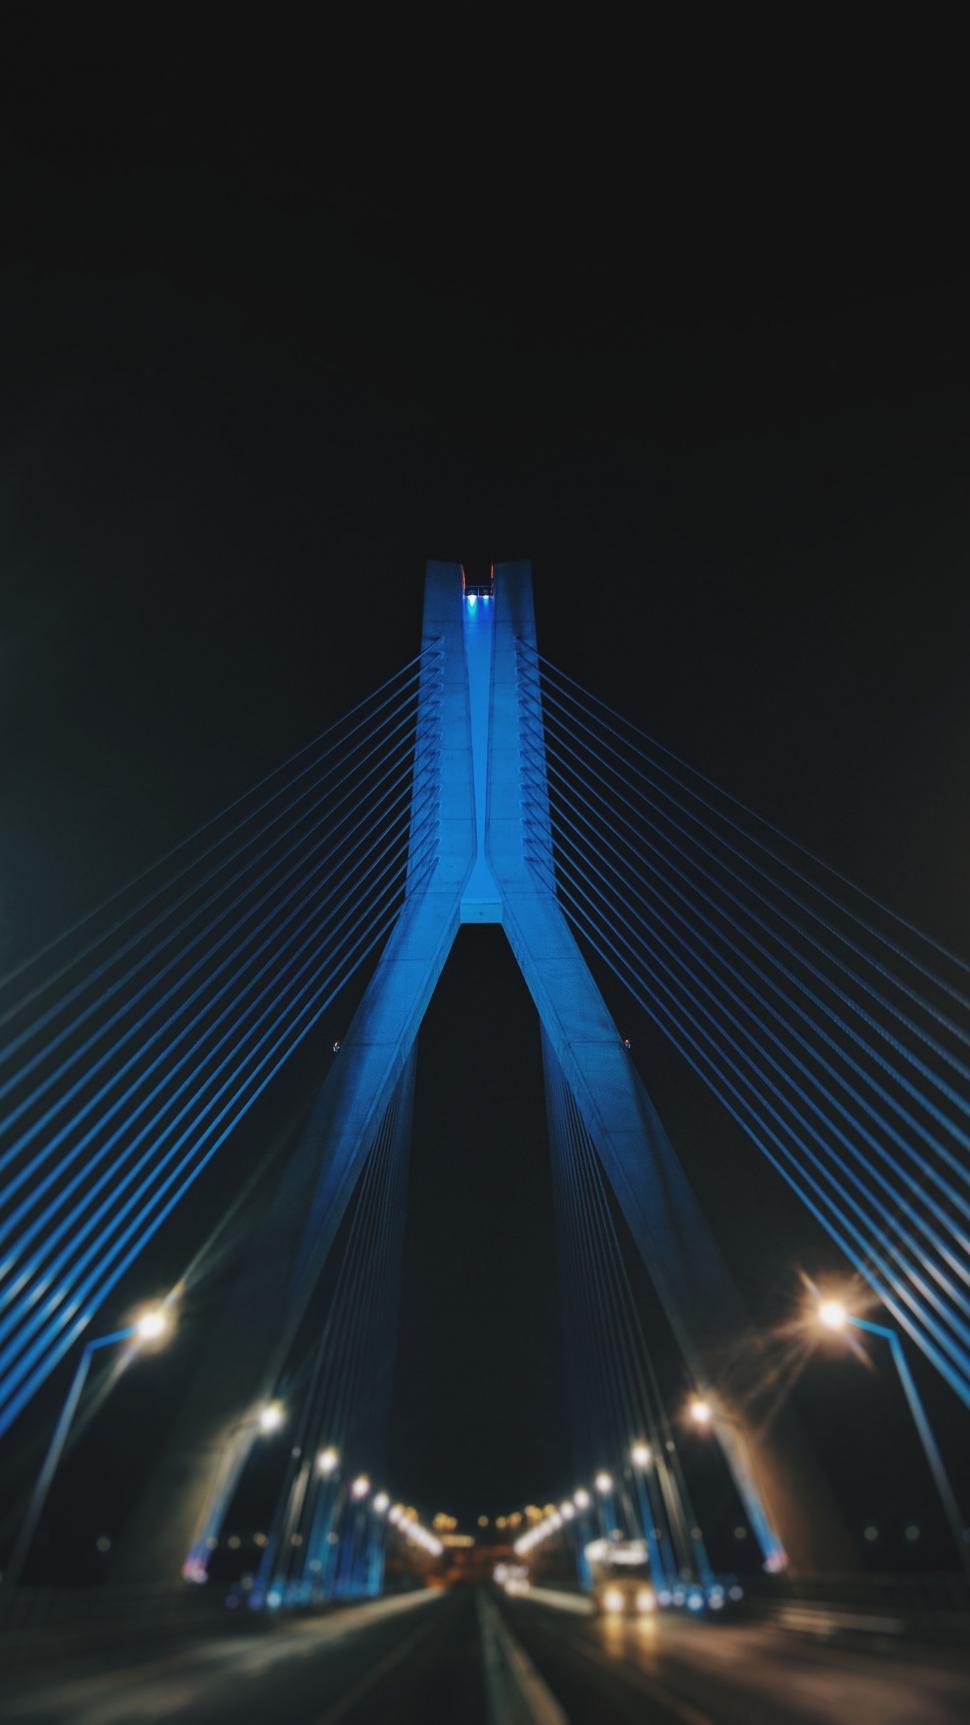 Free Image of Illuminated Tall Bridge in the Night 